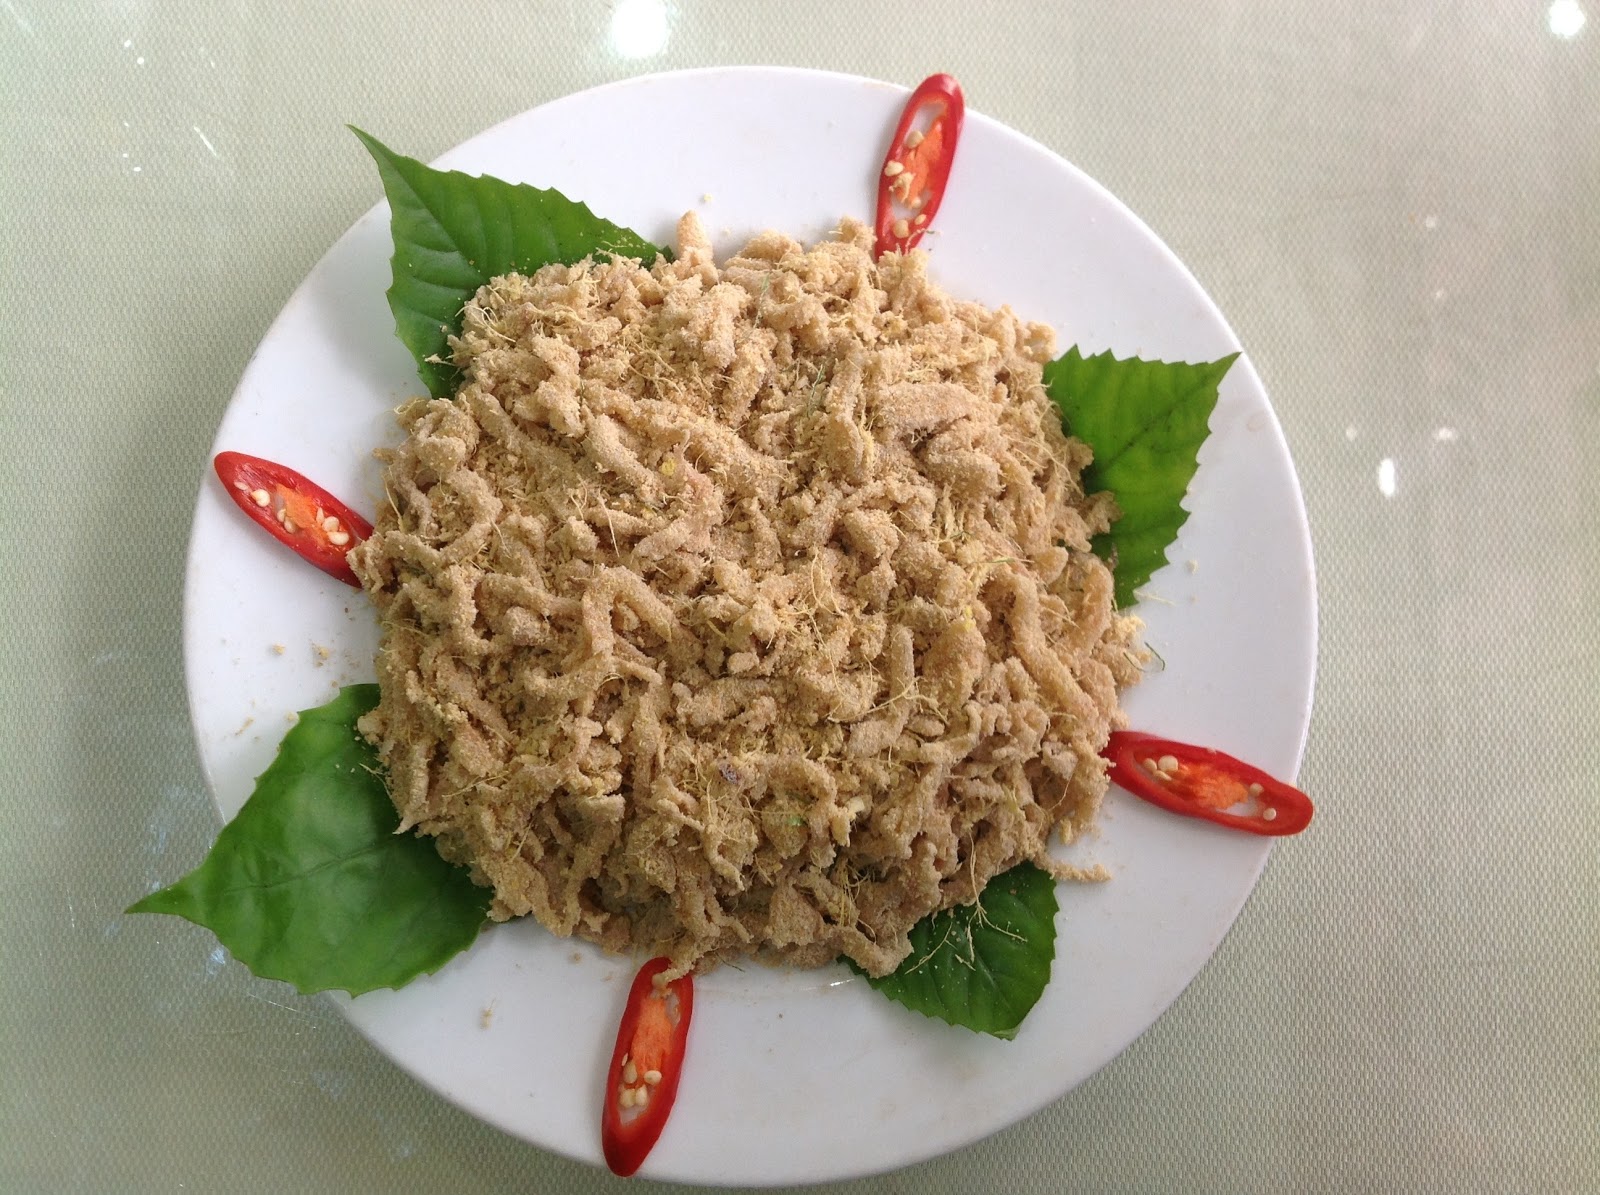 6. Kim Son raw Nhech fish salad